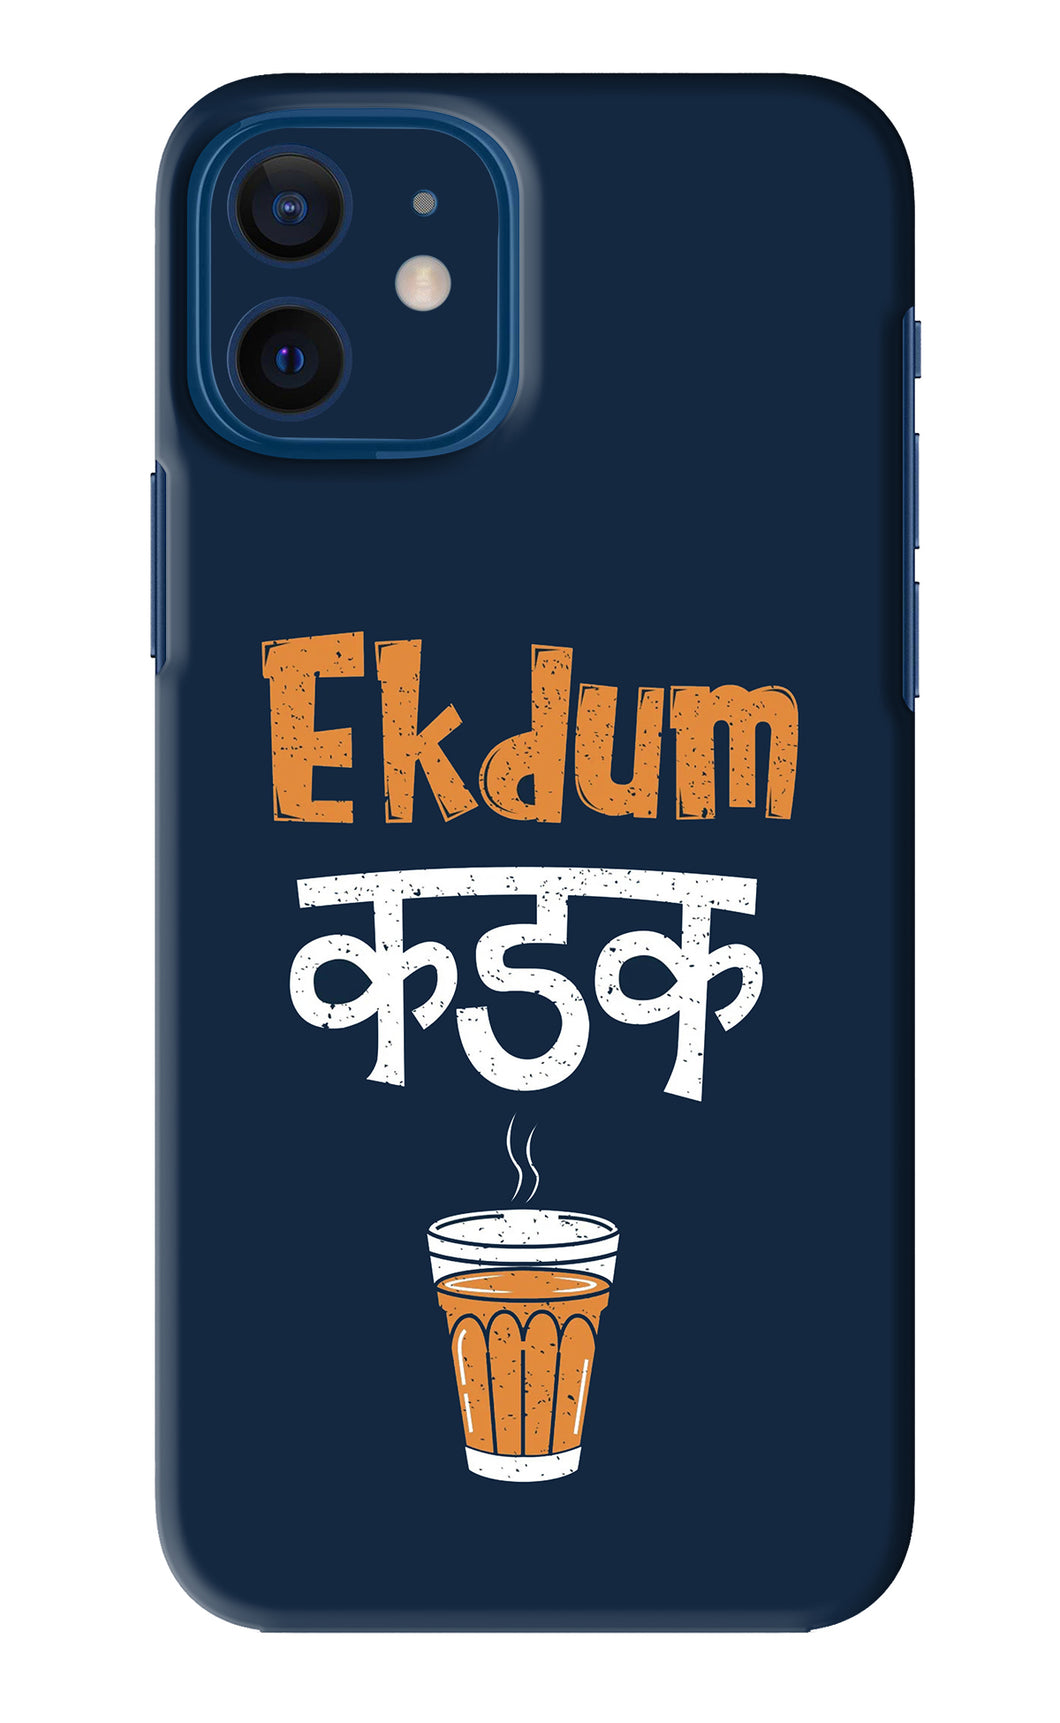 Ekdum Kadak Chai iPhone 12 Back Skin Wrap